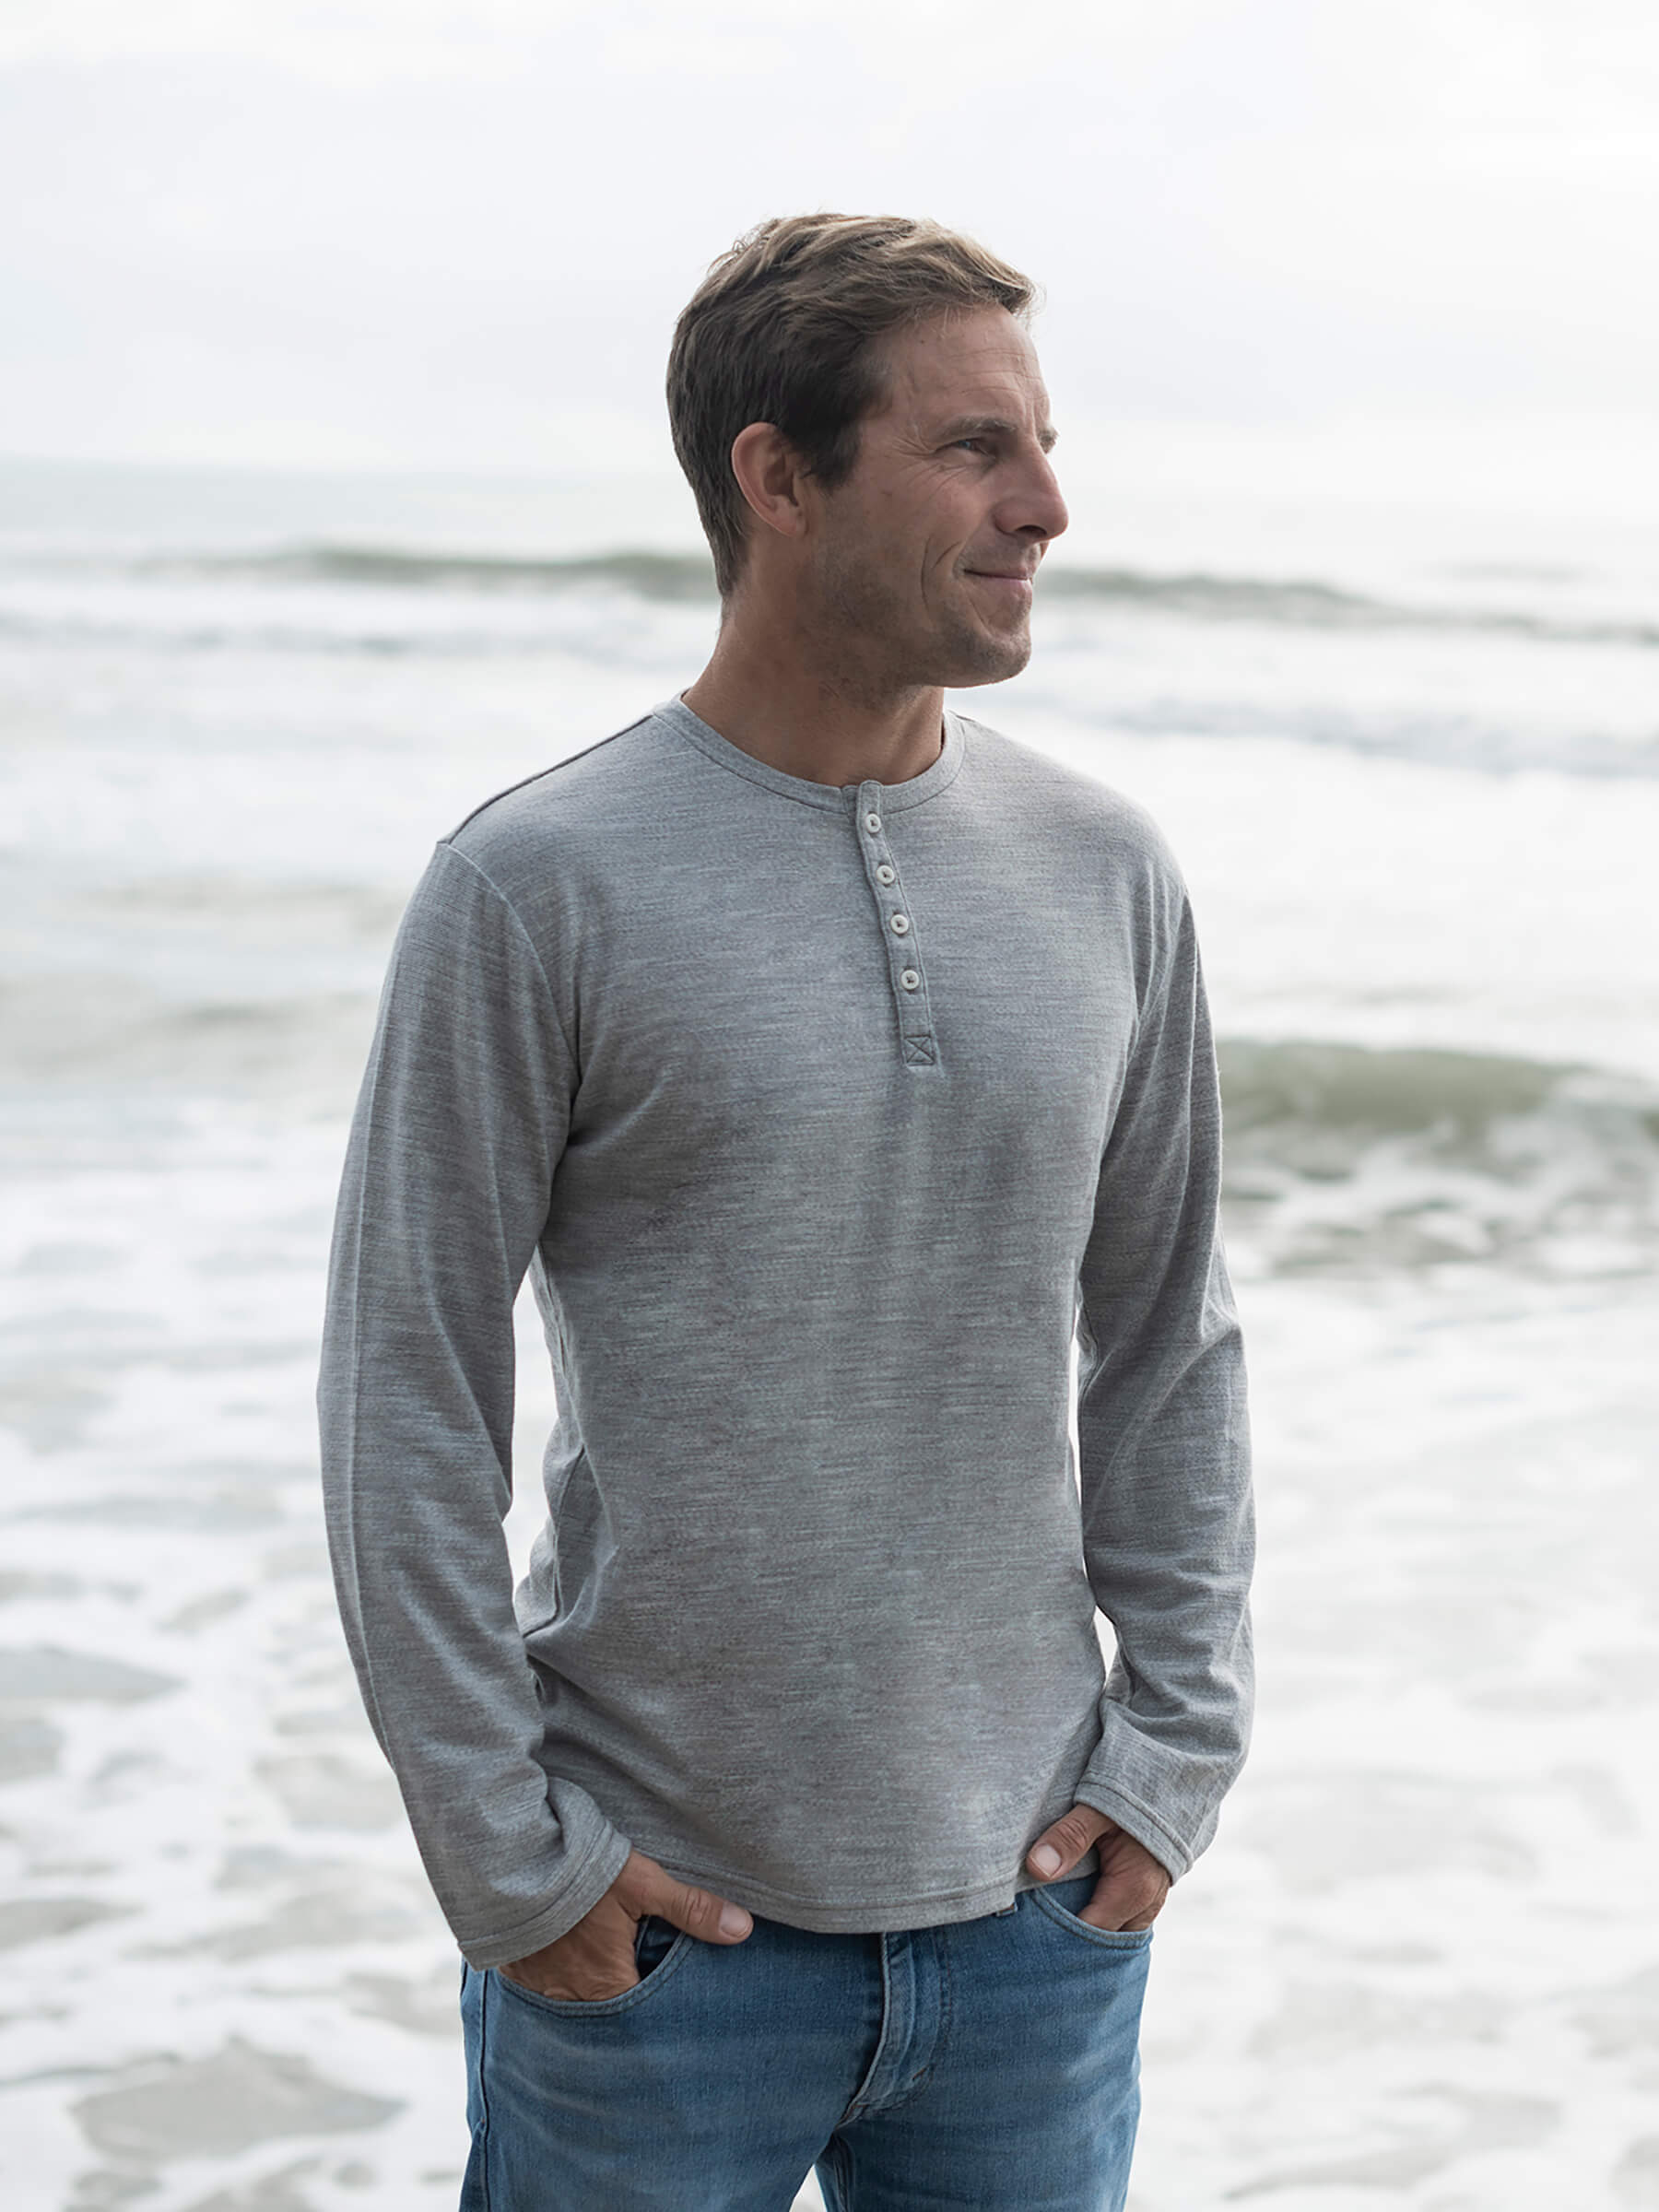 Men's Long Sleeve Henley 3 Button Pullover Cotton T-Shirt Crew Neck